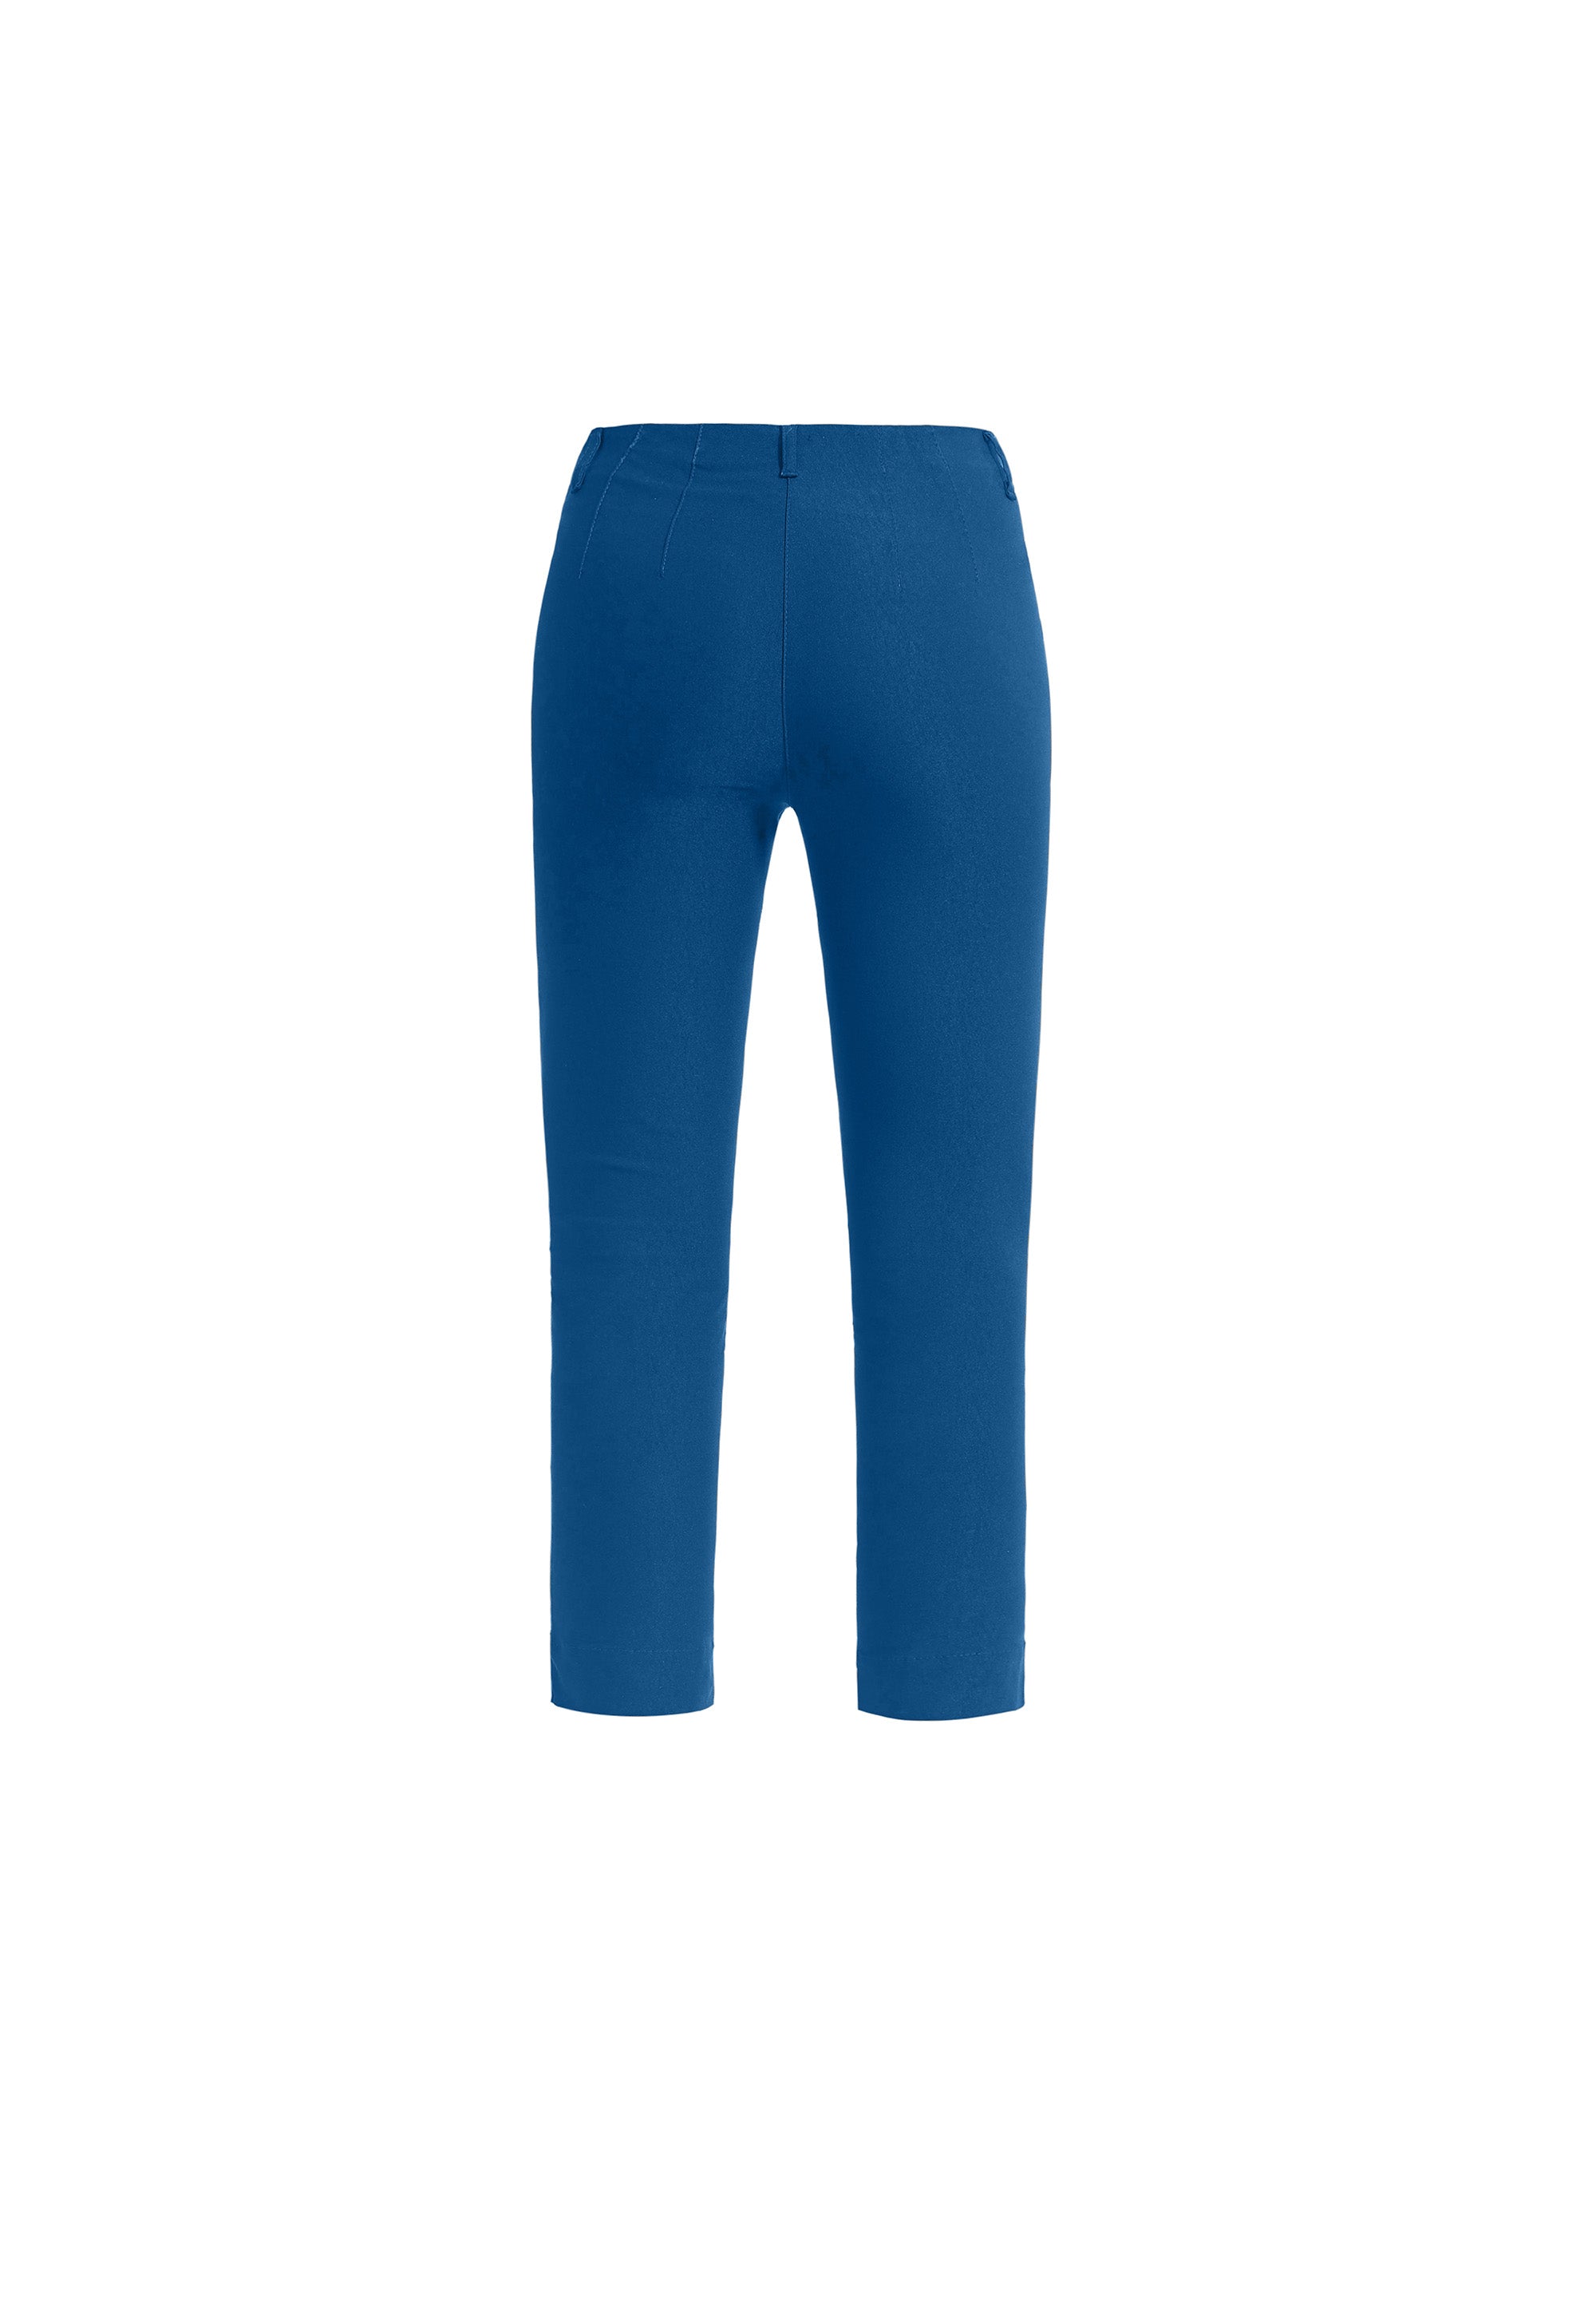 LAURIE Taylor Regular Crop Trousers REGULAR 45000 True Blue